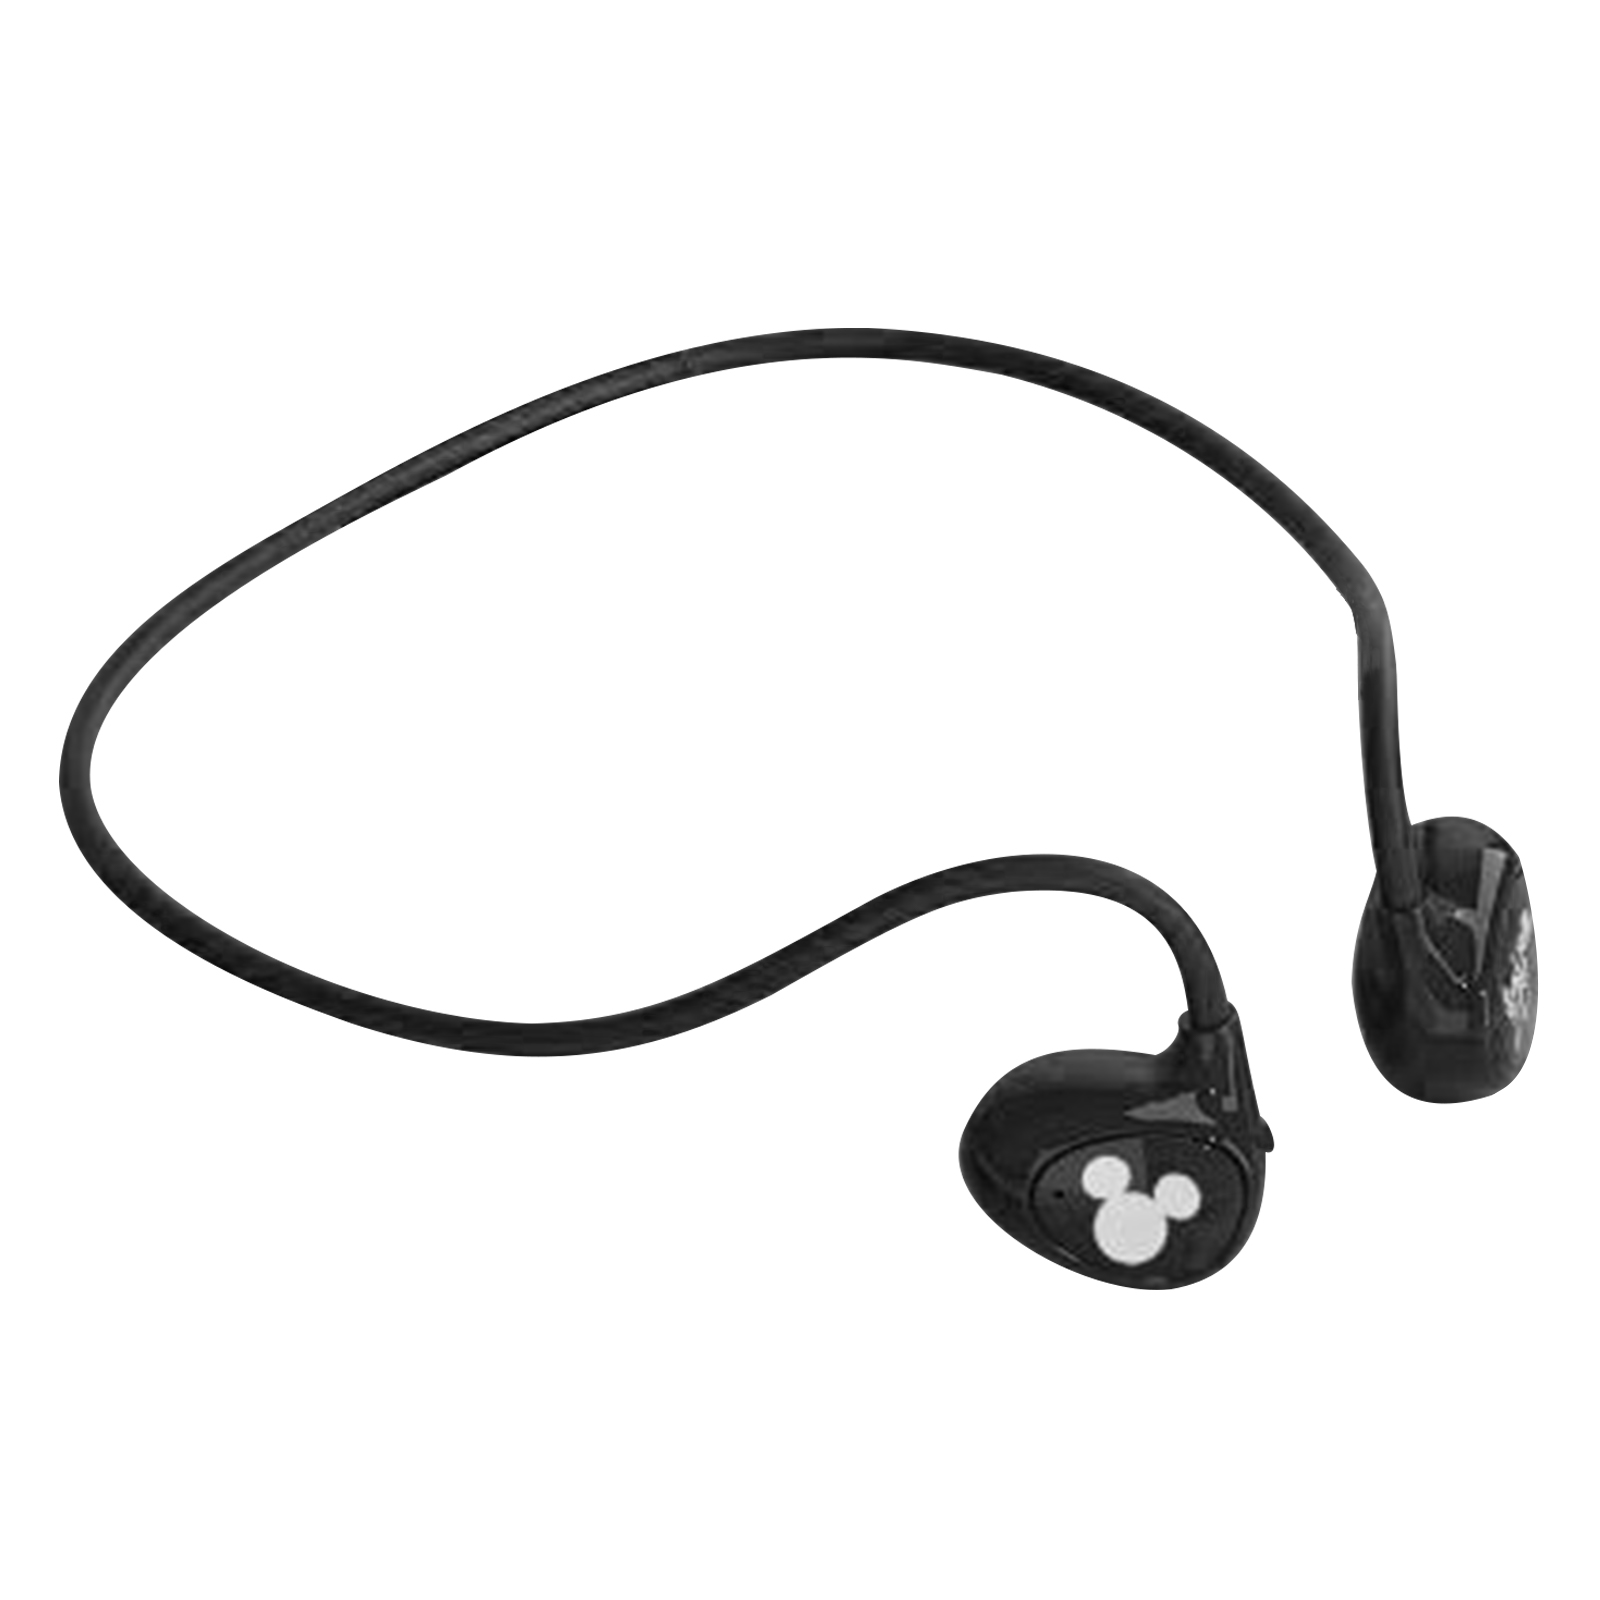 Wireless Bluetooth Headphones Air Conduction Open Ear Stereo Earphone Lightweight Sports Headset